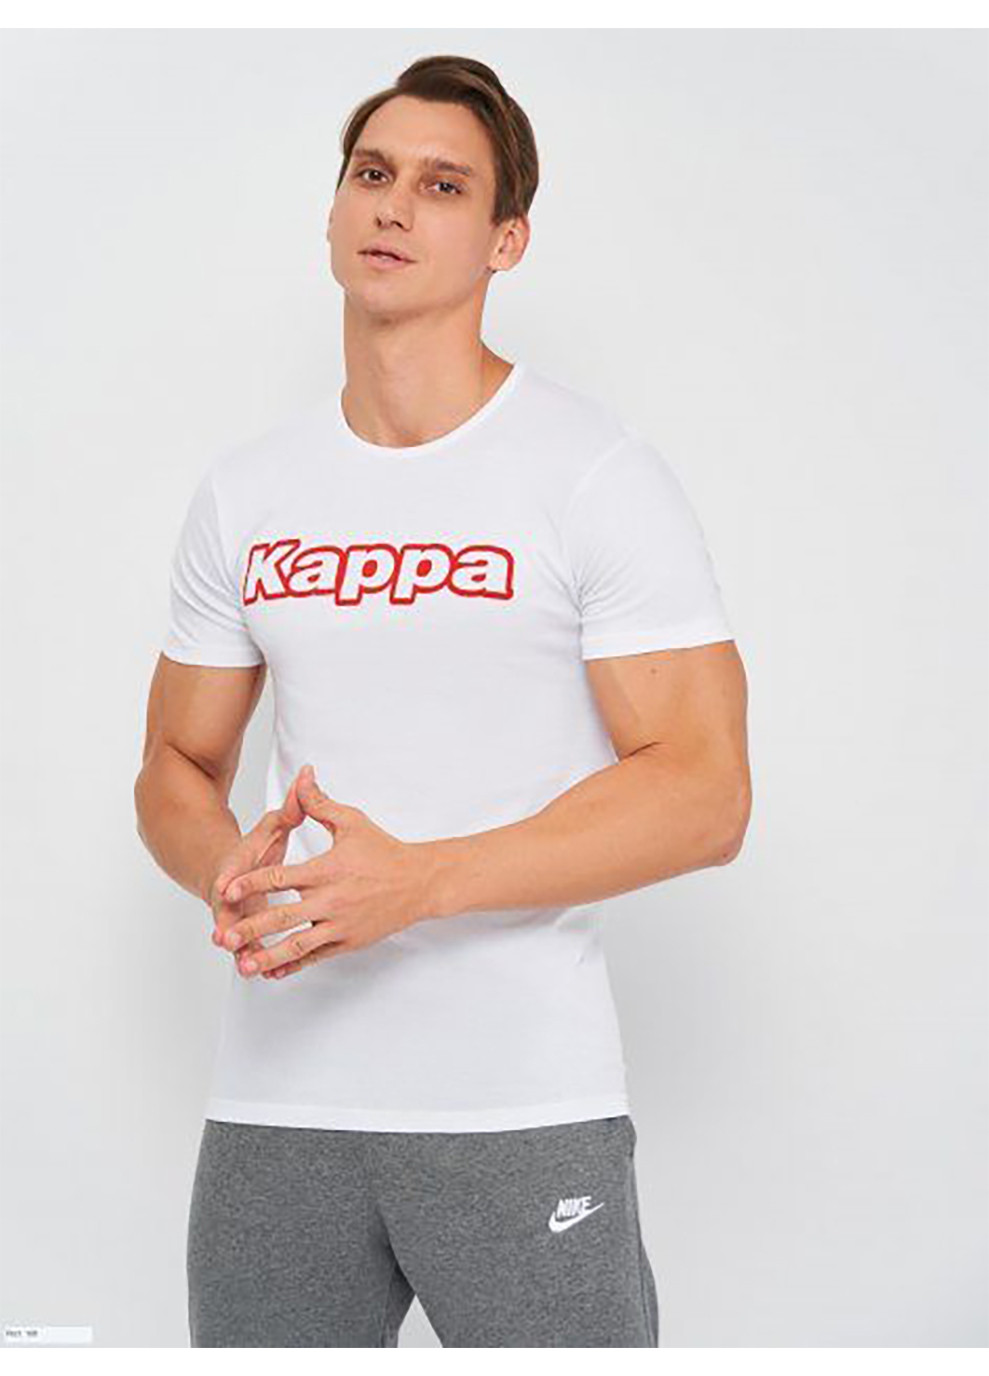 Біла футболка t-shirt mezza manica girocollo stampa logo petto білий m чоловік k1335 bianco-m Kappa